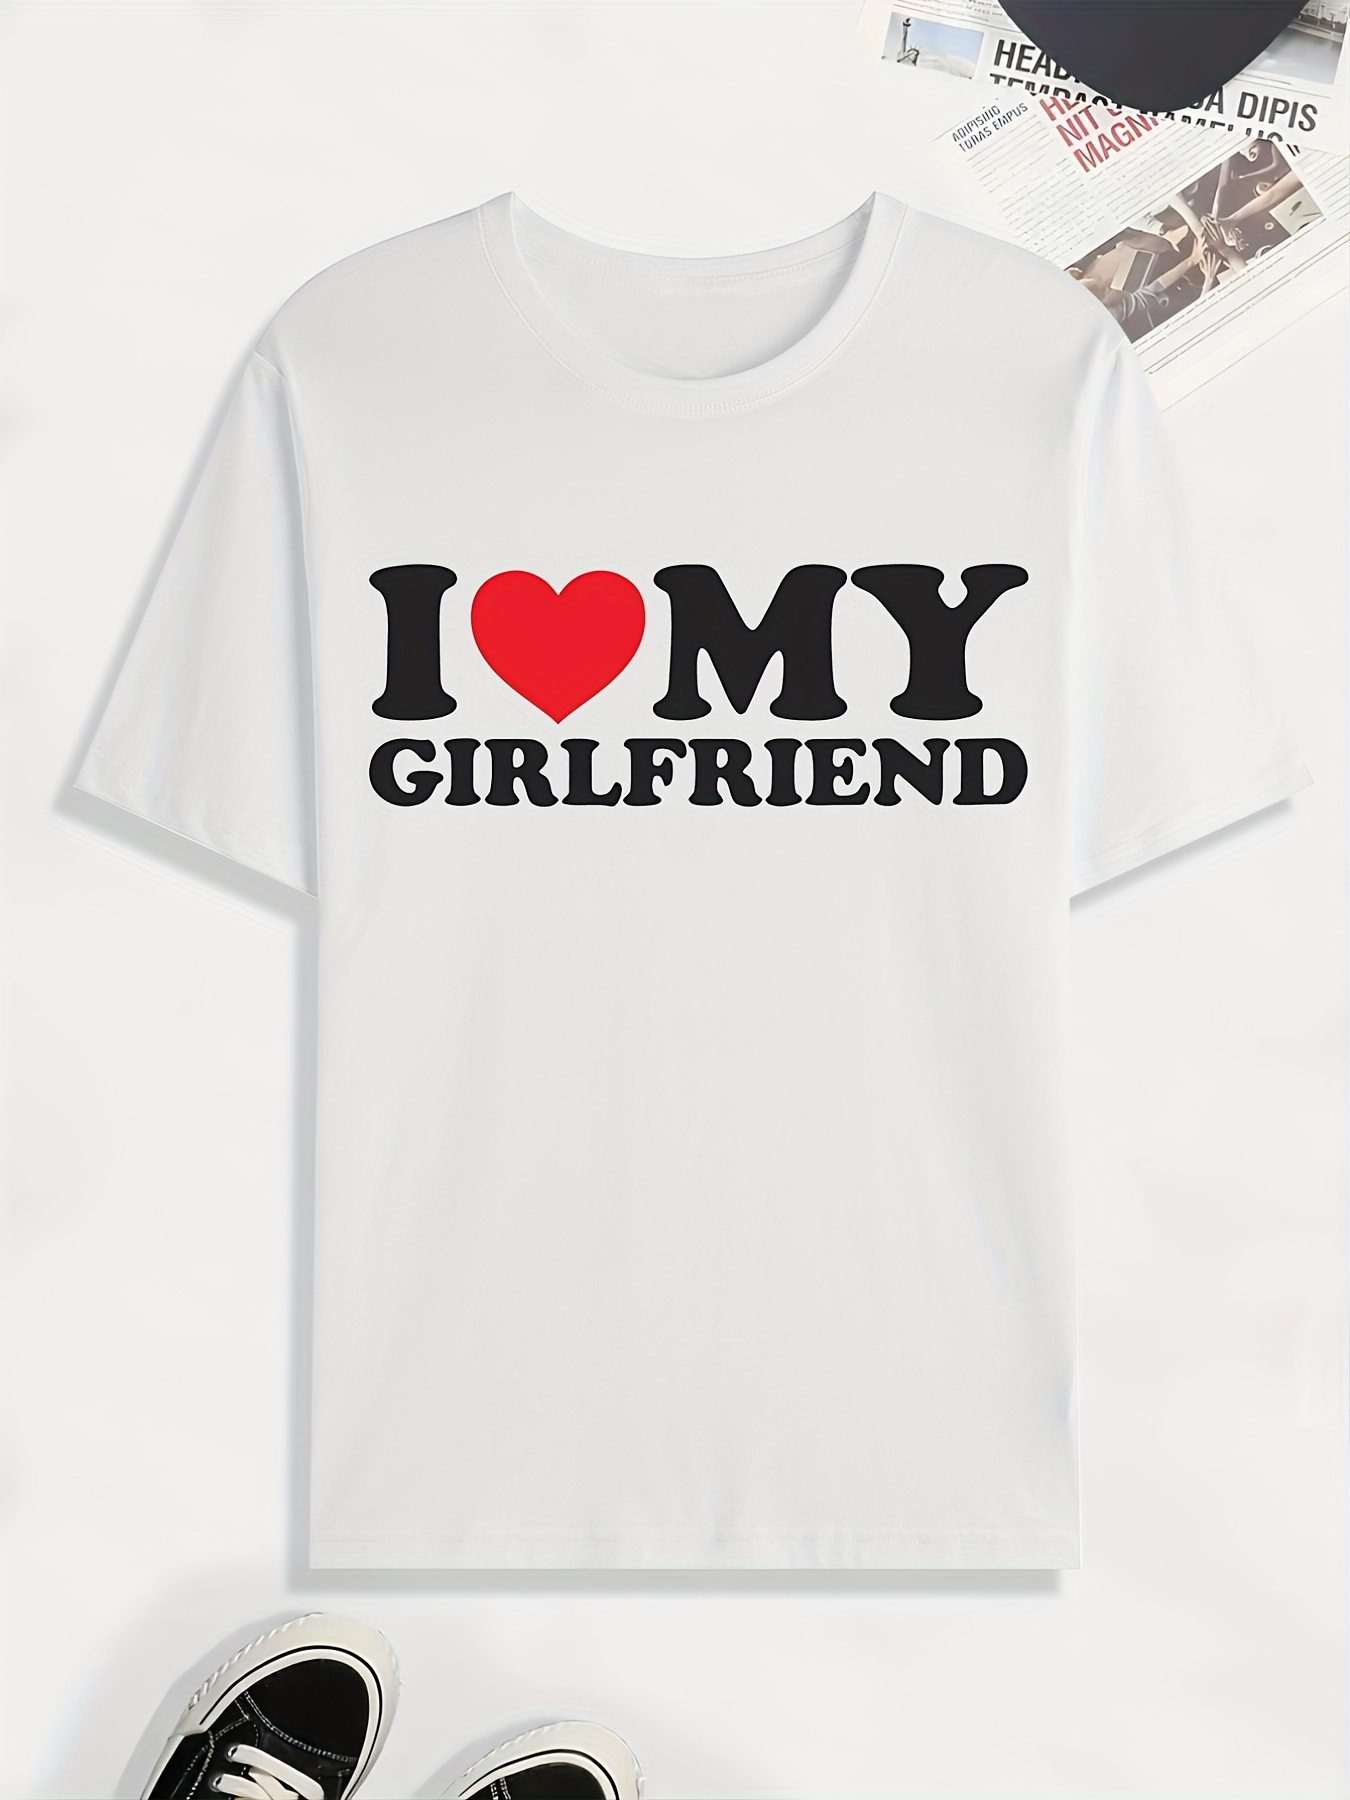 I LOVE MY GIRLFRIEND' Men's T-Shirt